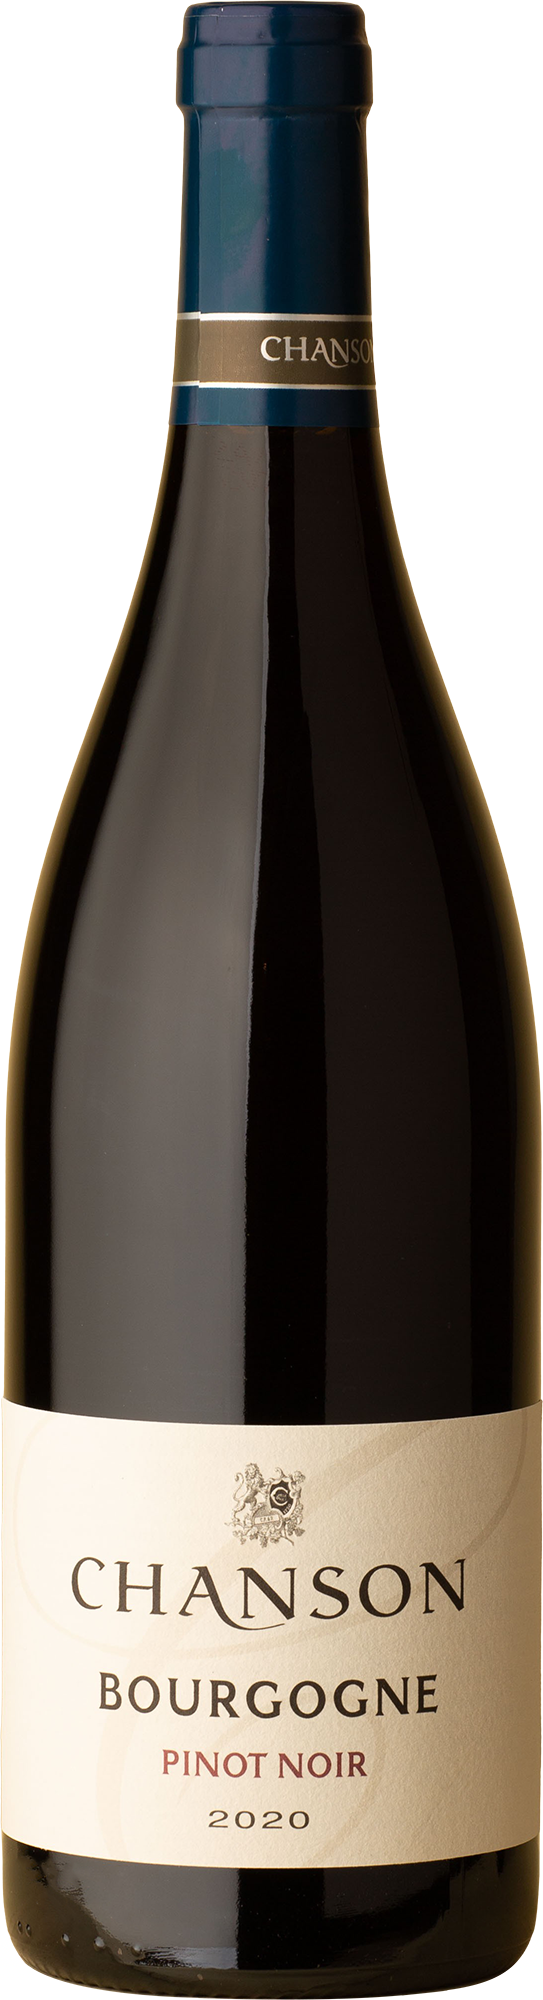 Domaine Chanson - Bourgogne Pinot Noir 2020 Red Wine